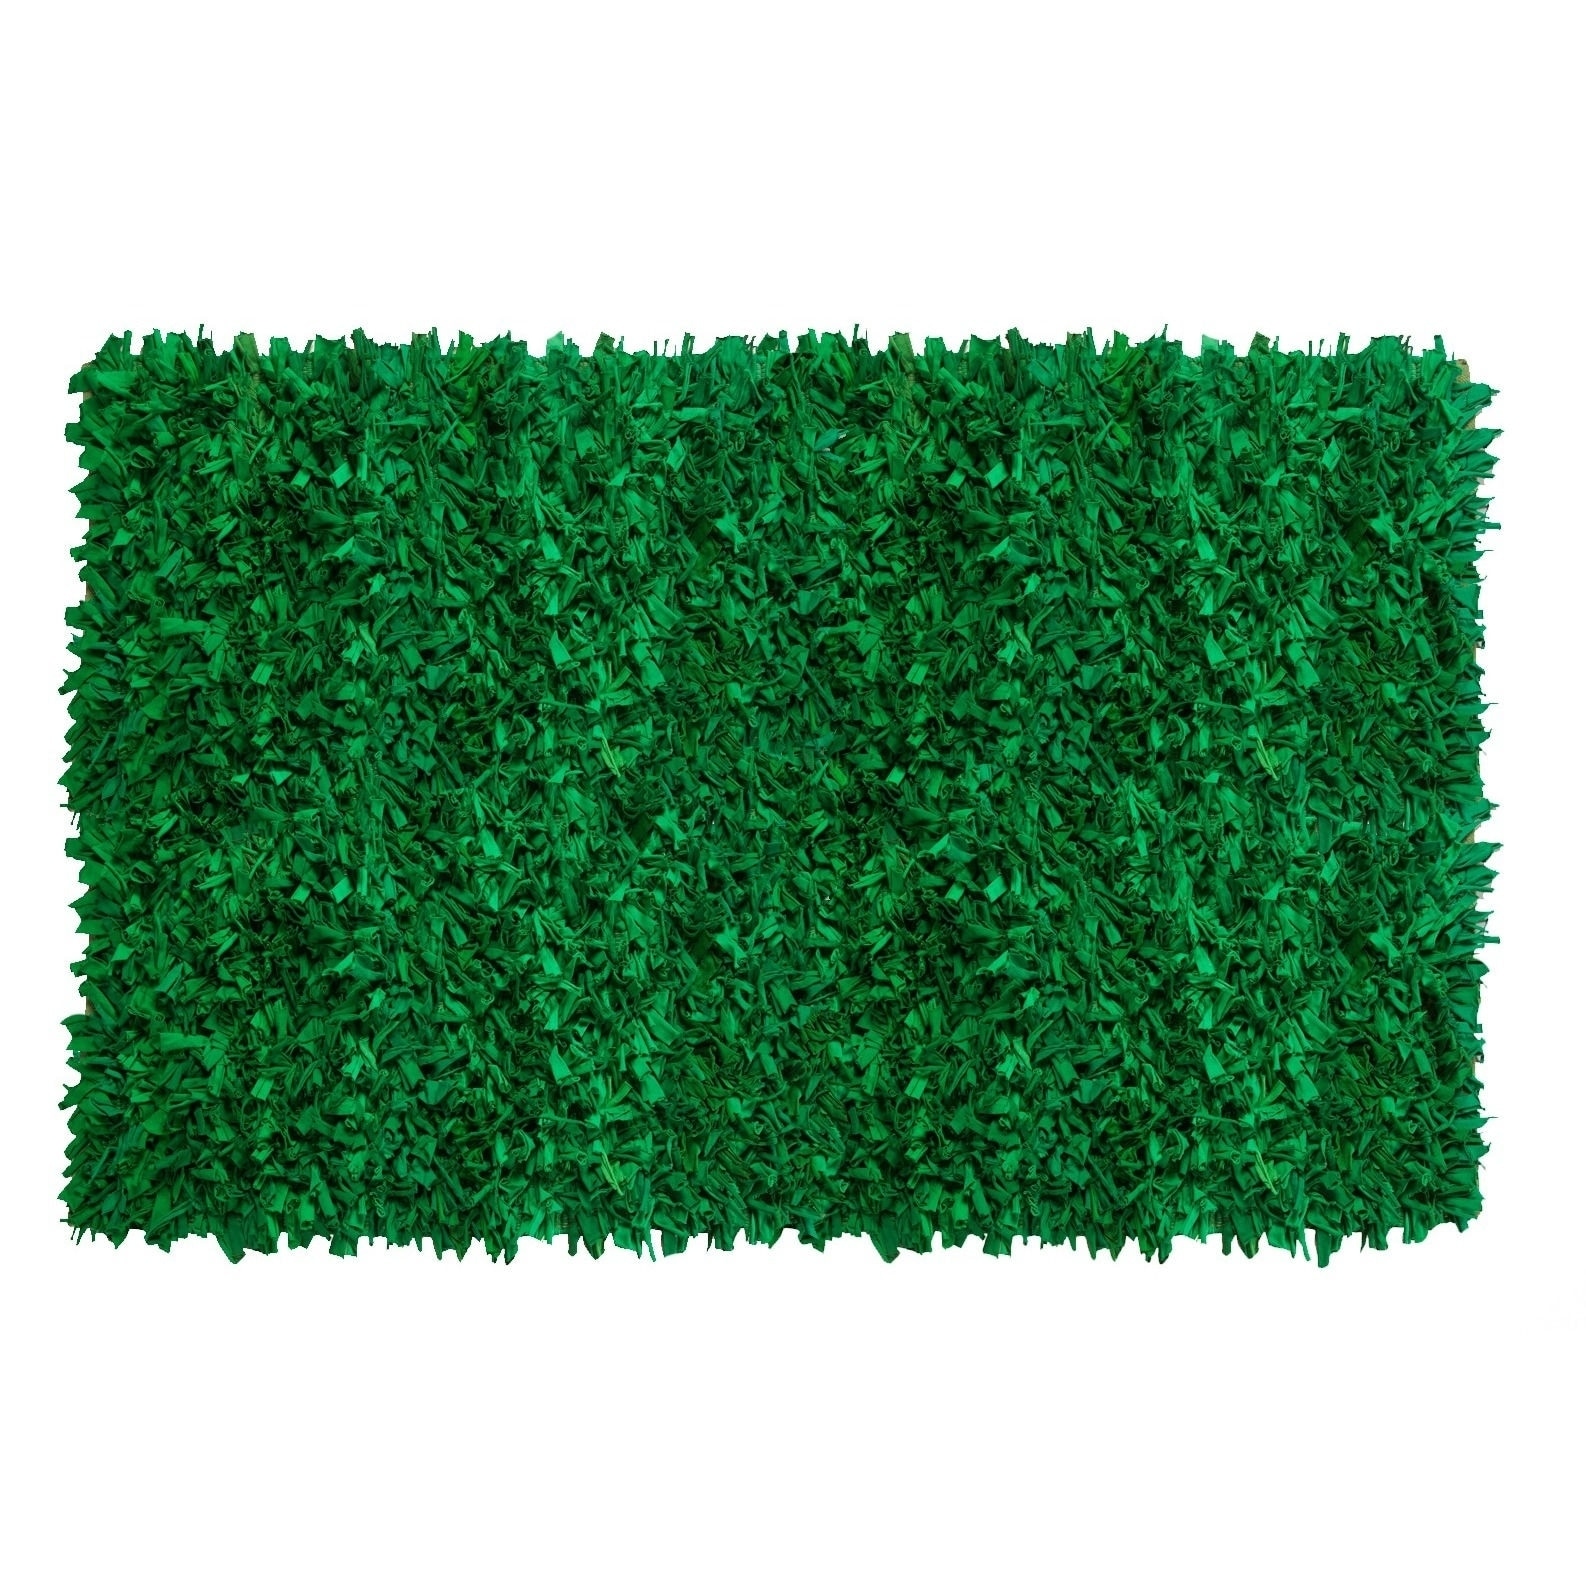 Jersey Green Shag Rug (5 X 8)